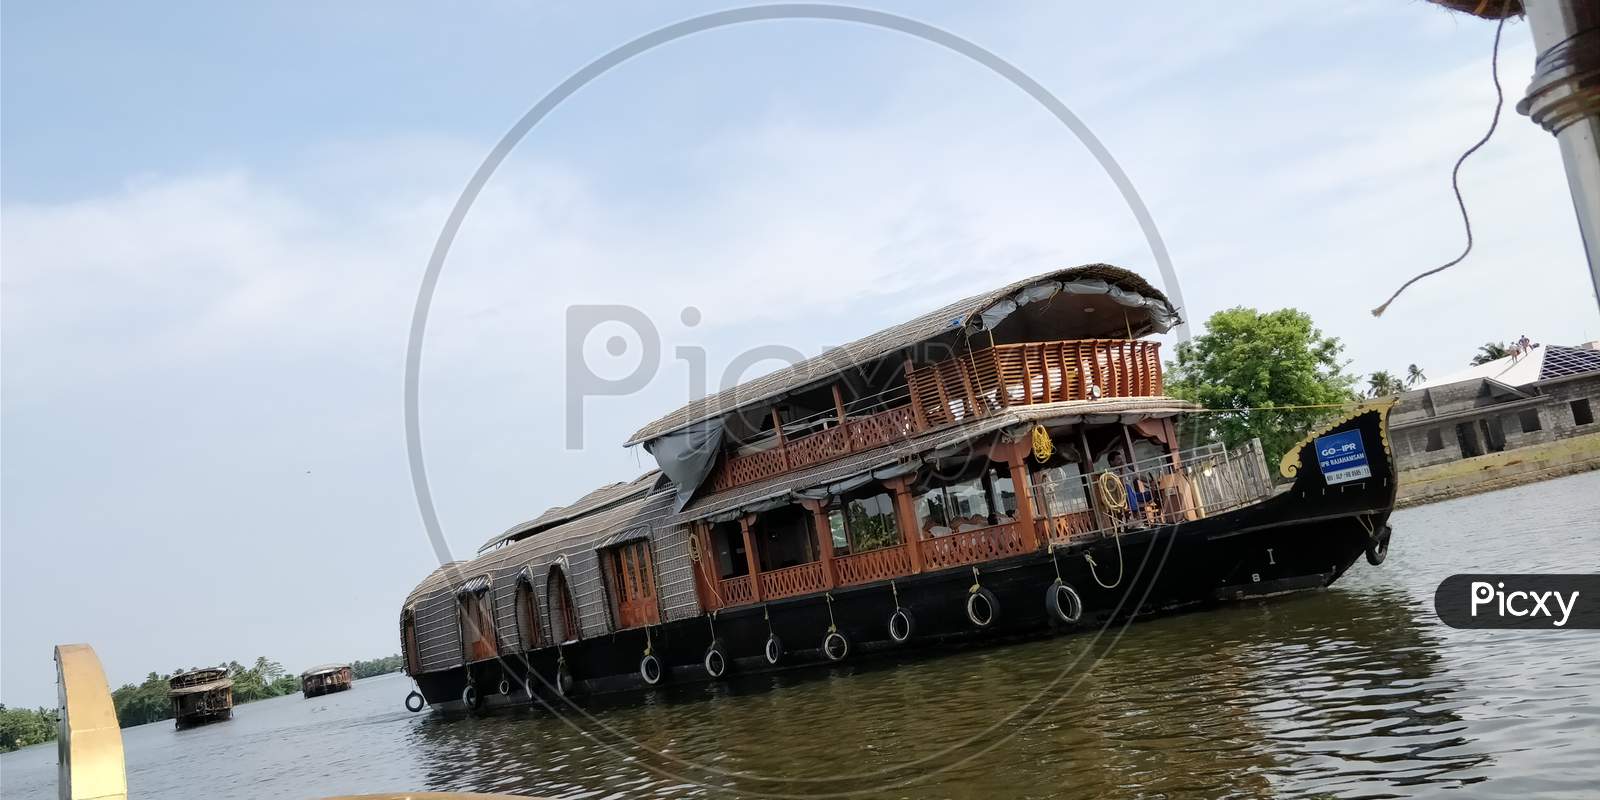 Alappuzha Backwater trip, Kerala